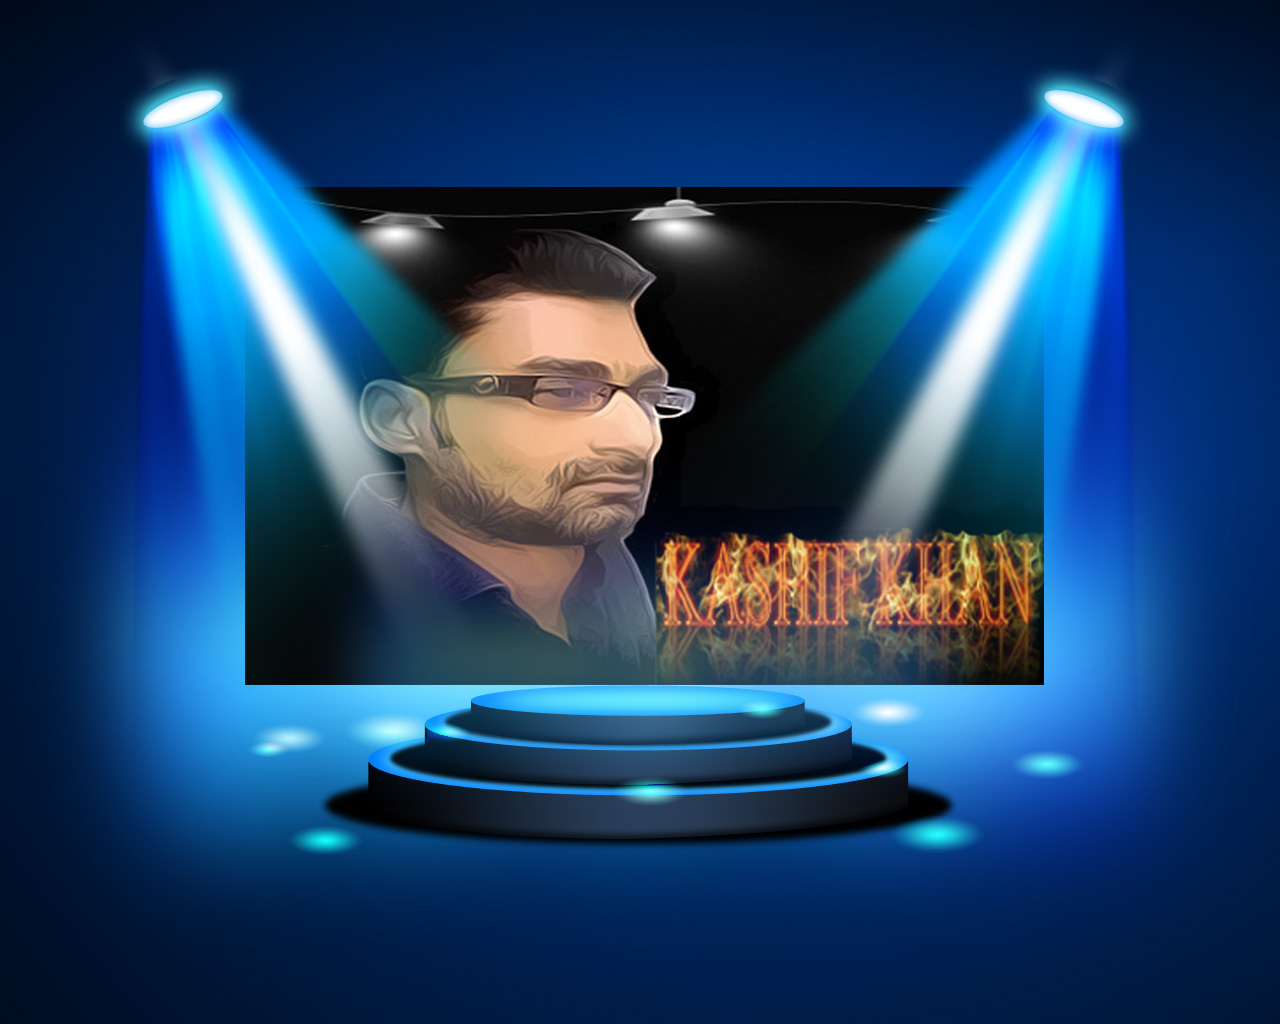 Stage Lighting Background Psd Kashif Khan Zone